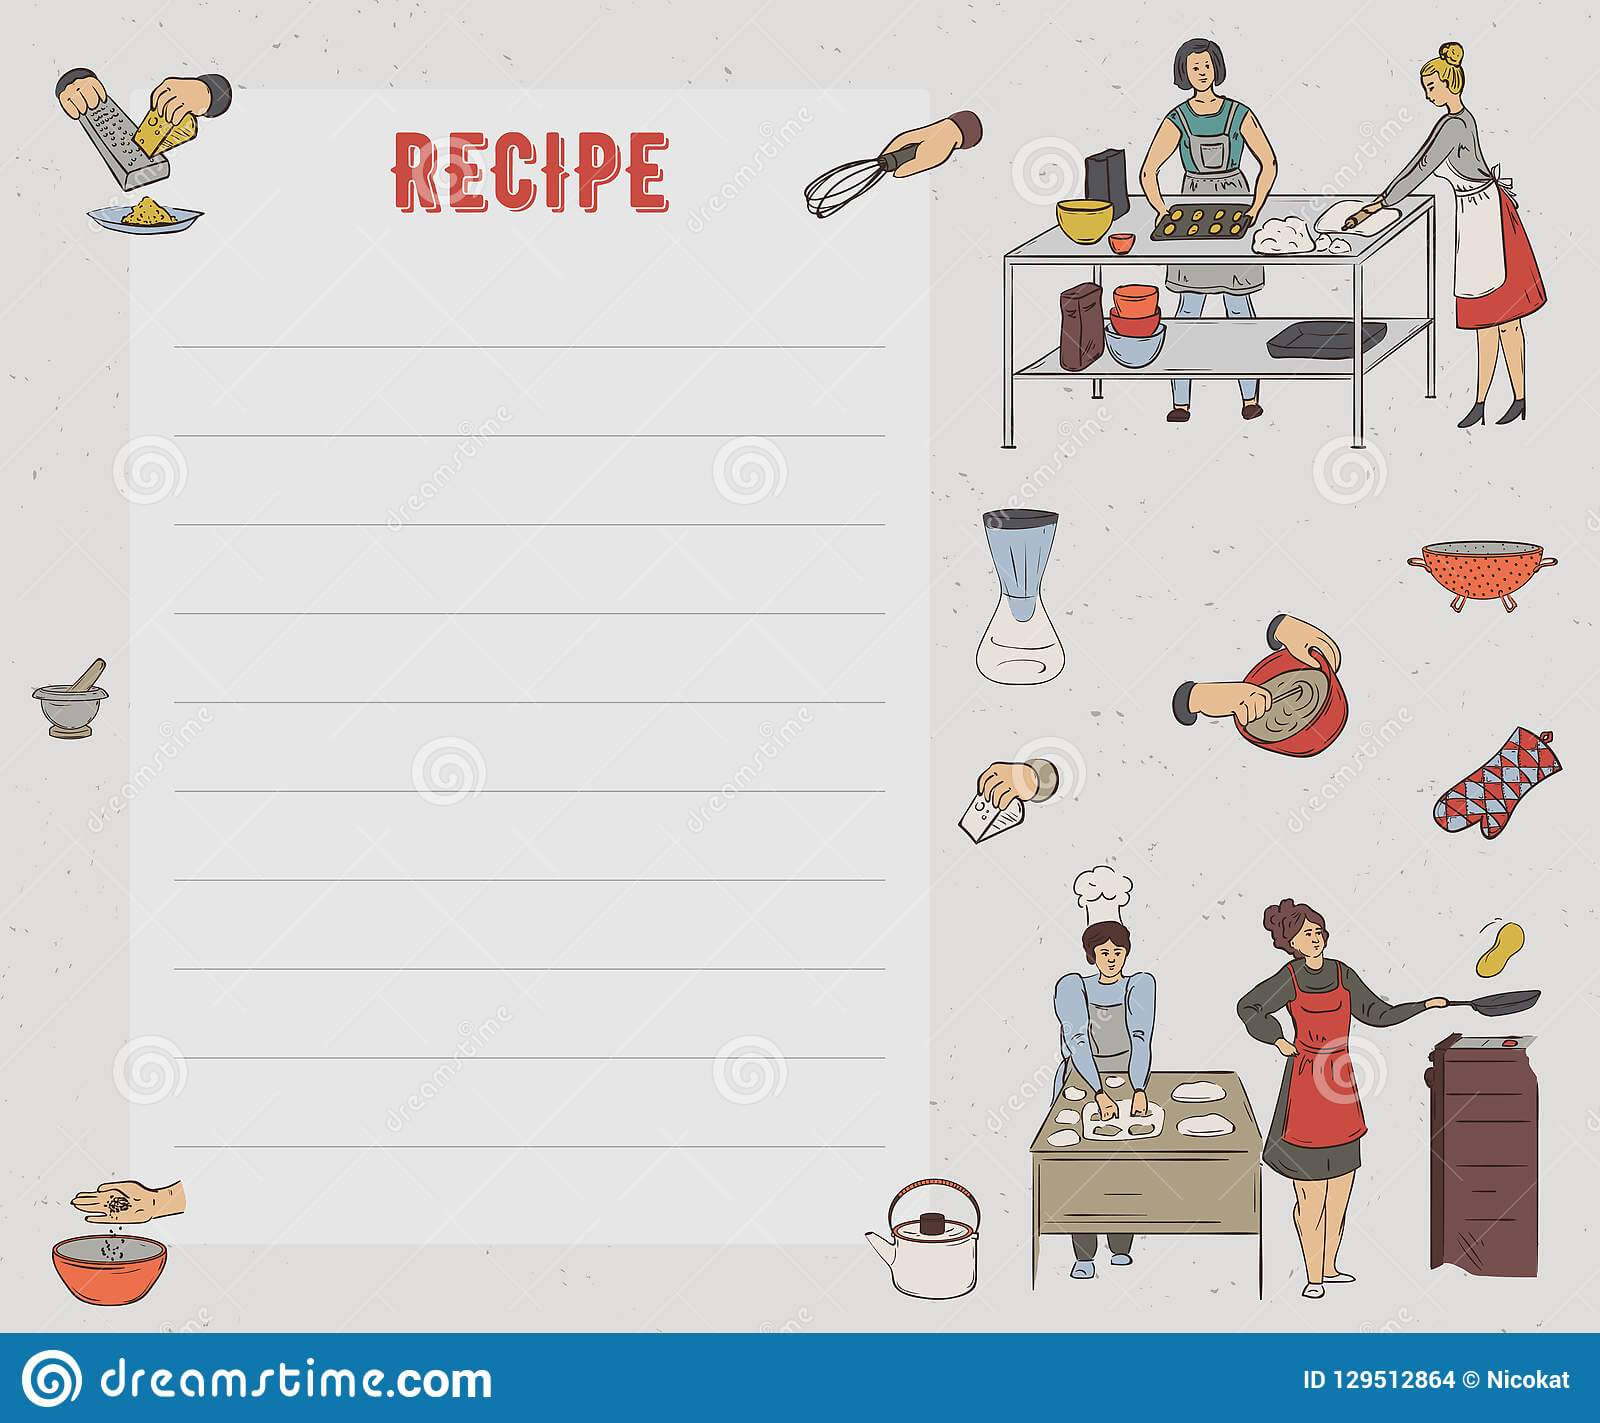 Recipe Card. Cookbook Page. Design Template With People Pertaining To Recipe Card Design Template